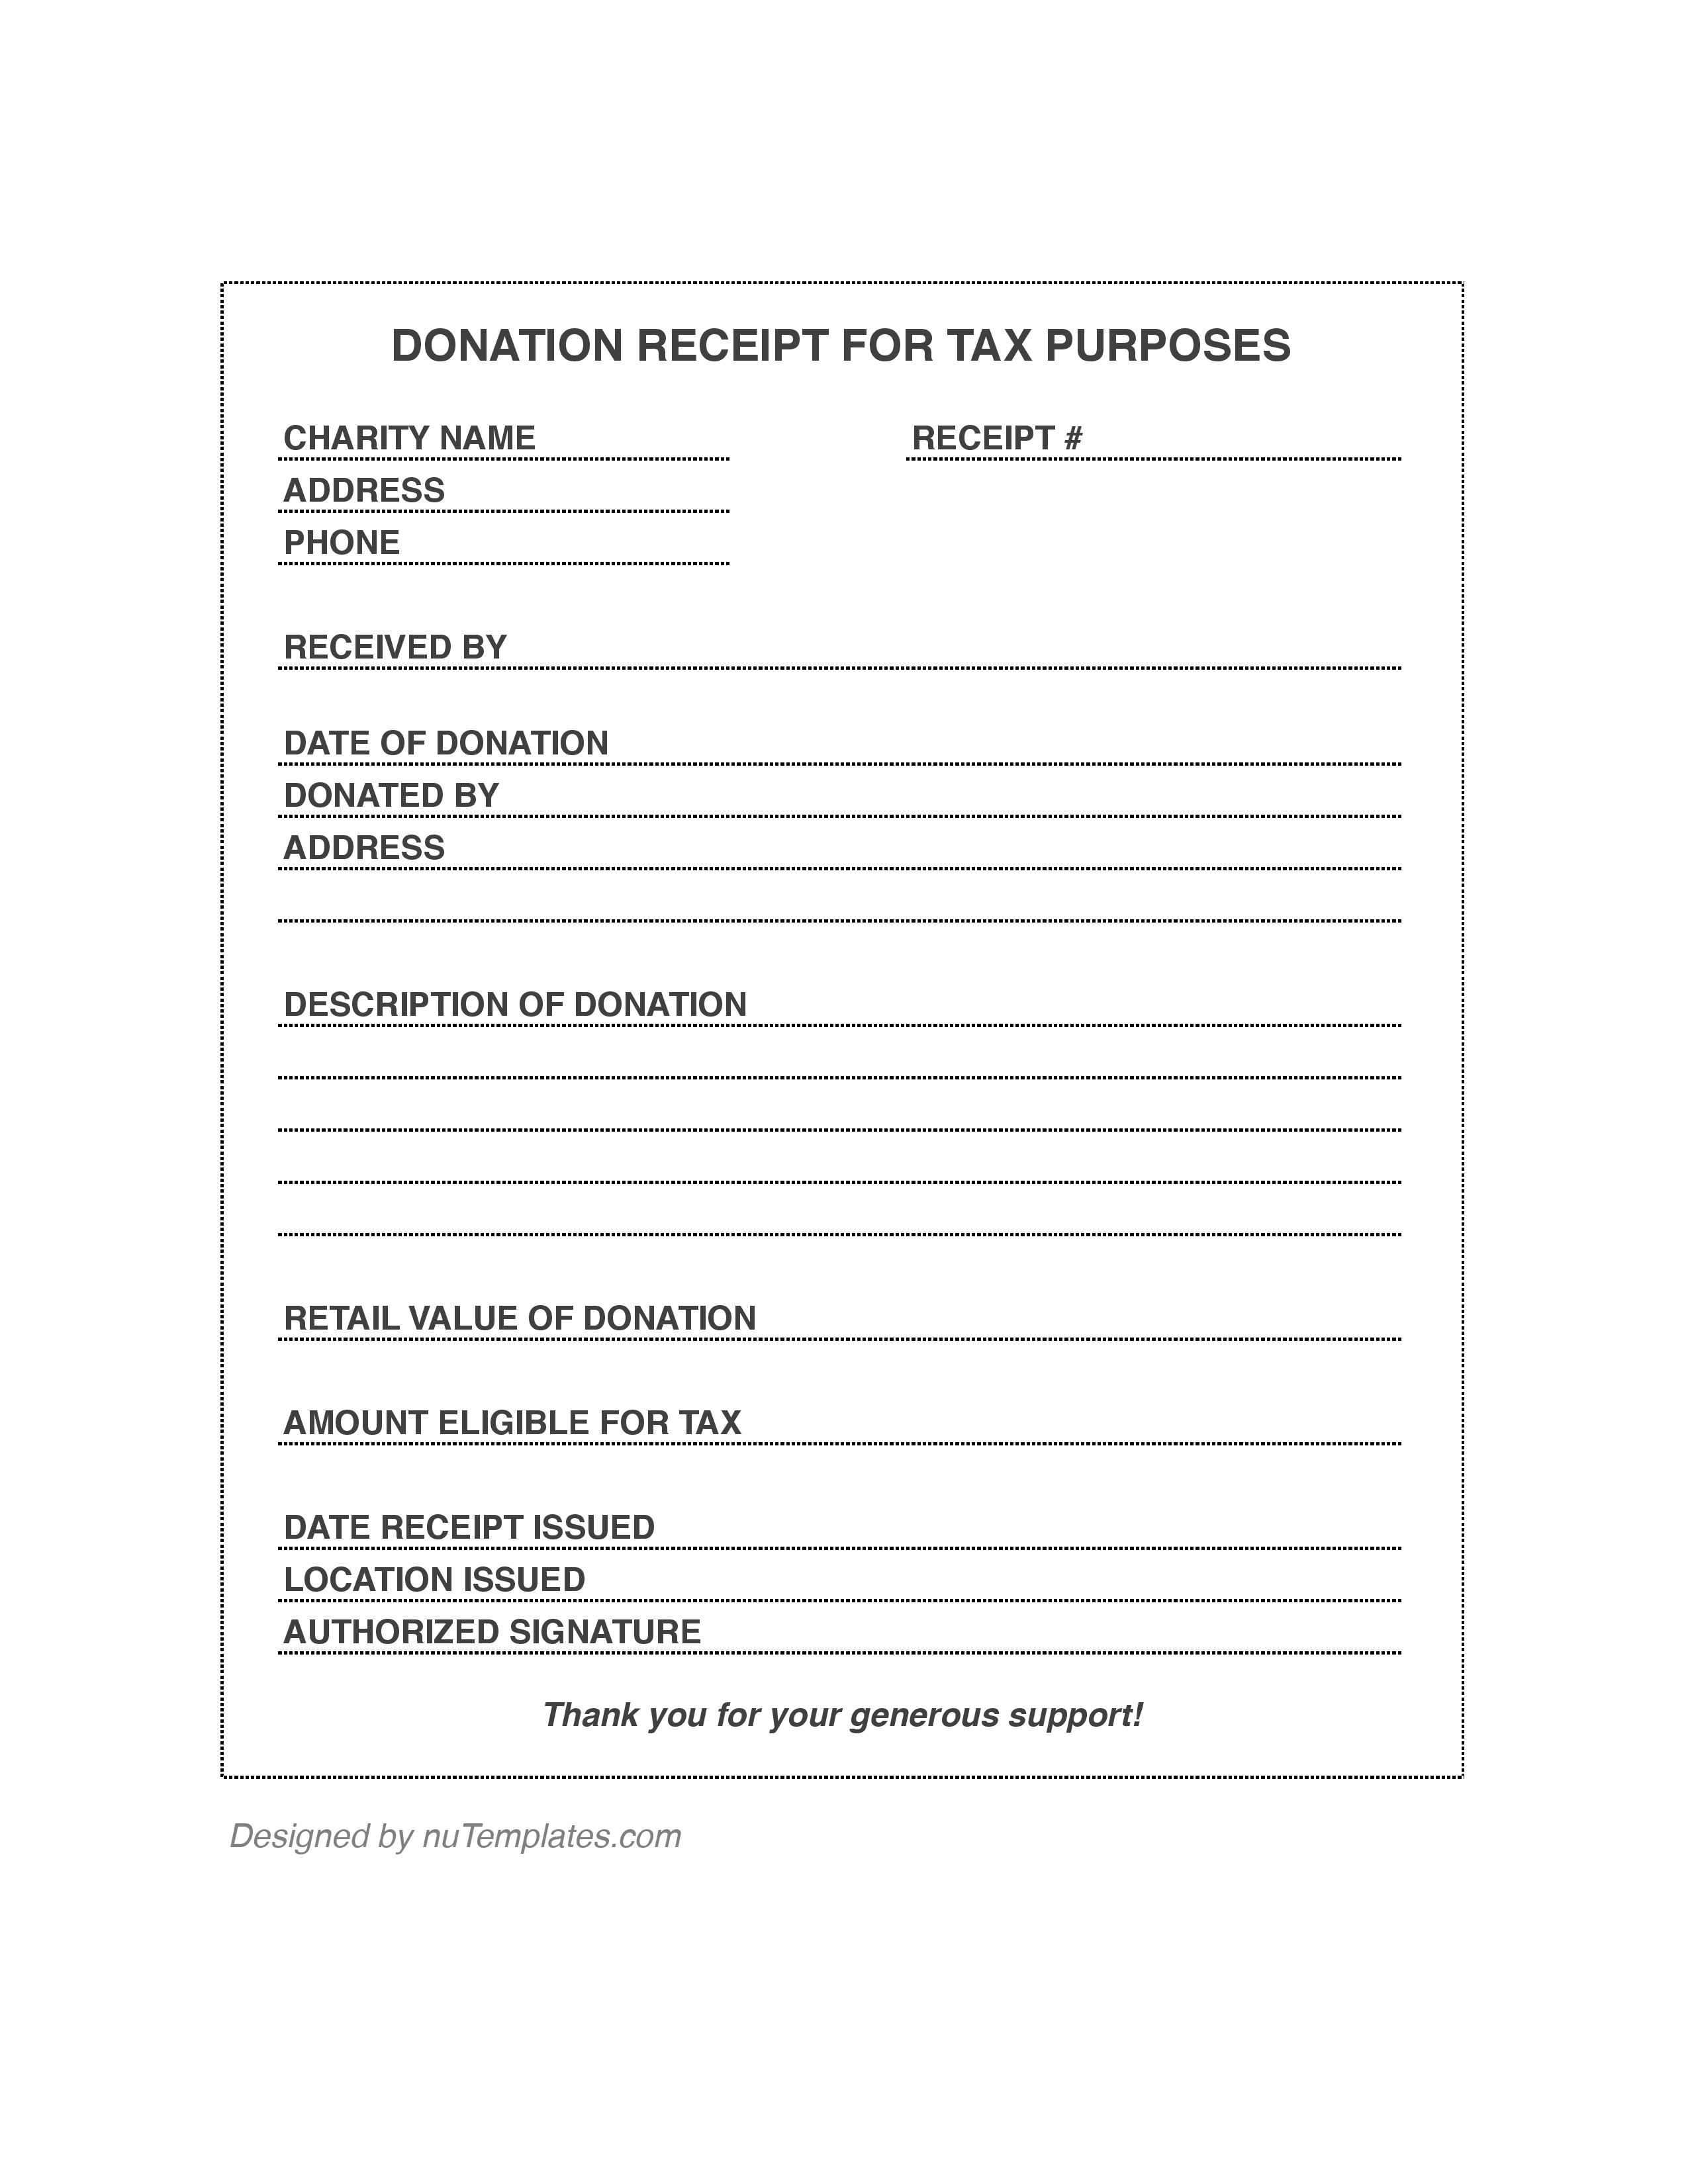 donation-receipt-template-donation-receipts-nutemplates